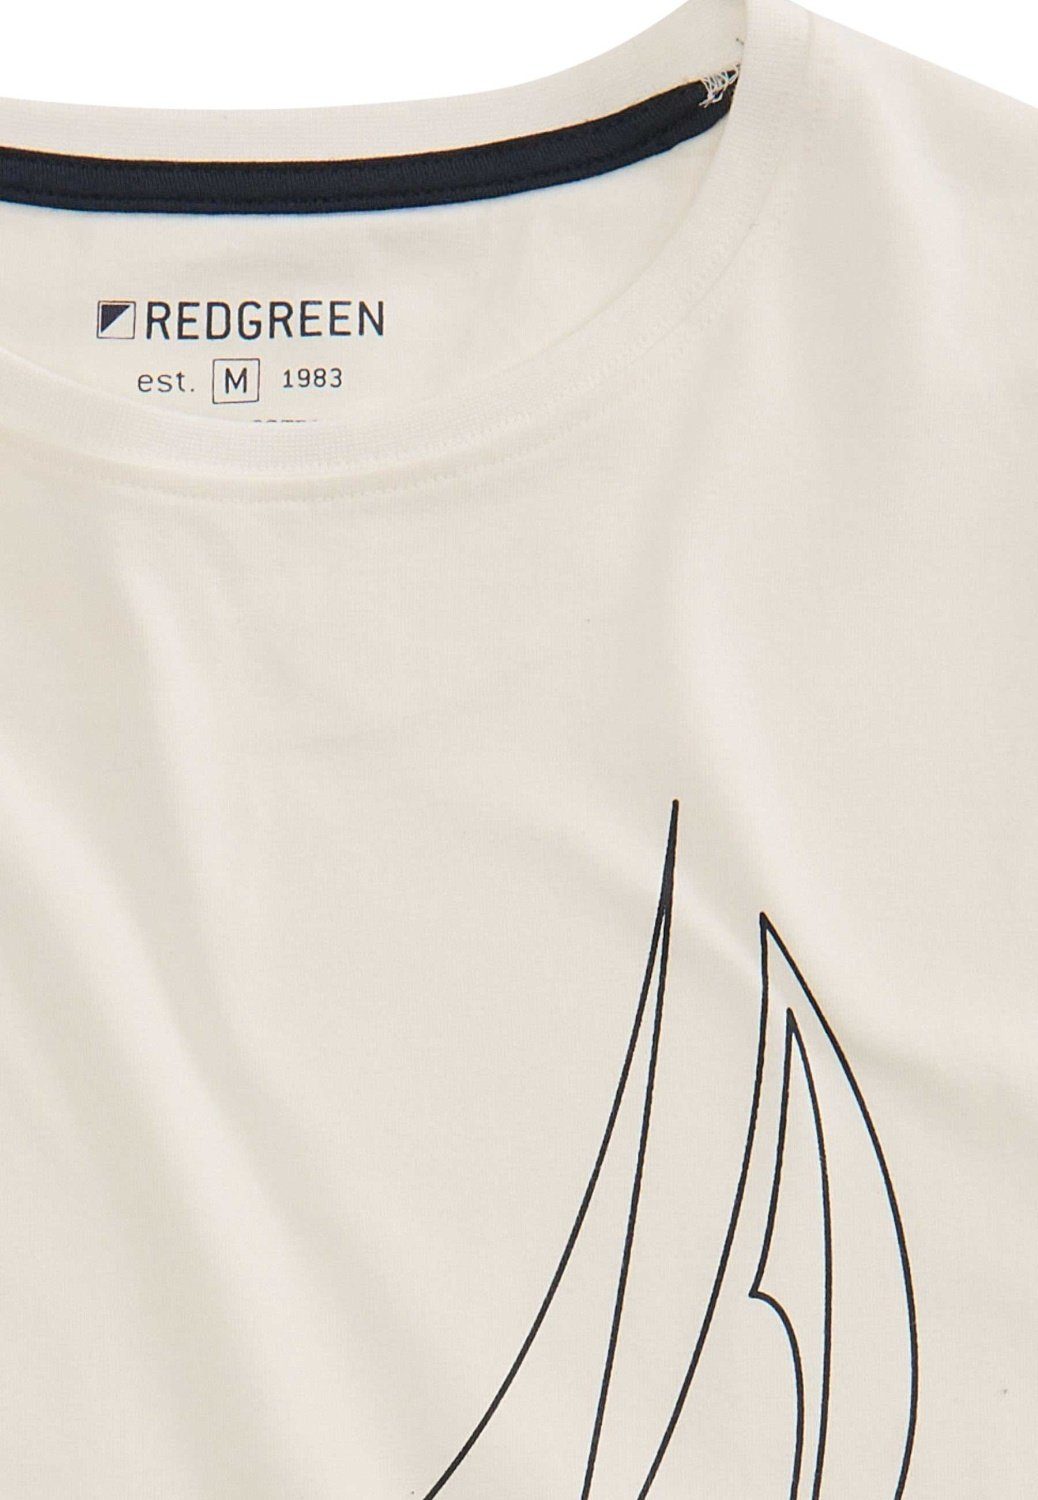 REDGREEN Print-Shirt mit Segelboot Print cremeweiß Chet